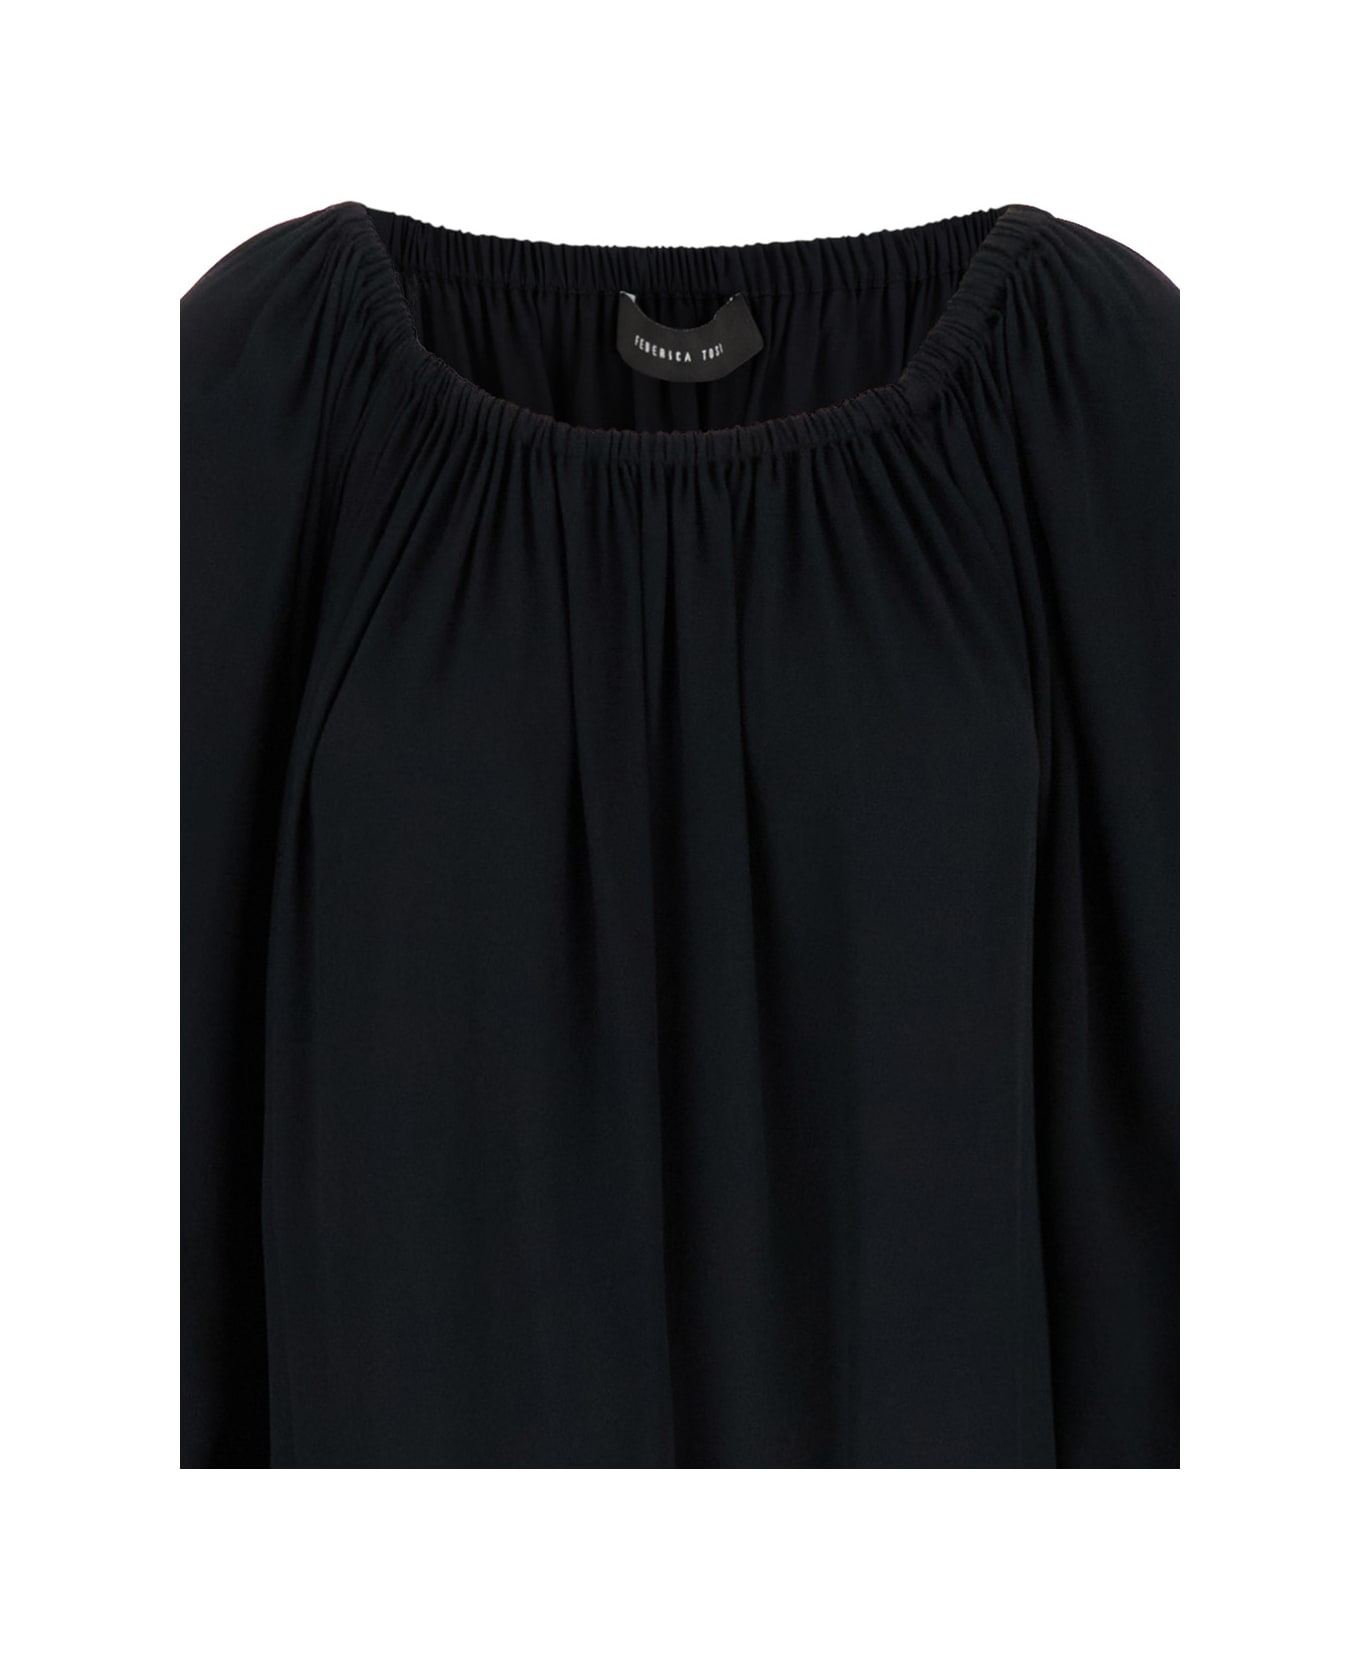 Federica Tosi Black Off Shoulder Maxi Dress In Silk Blend Woman - Black